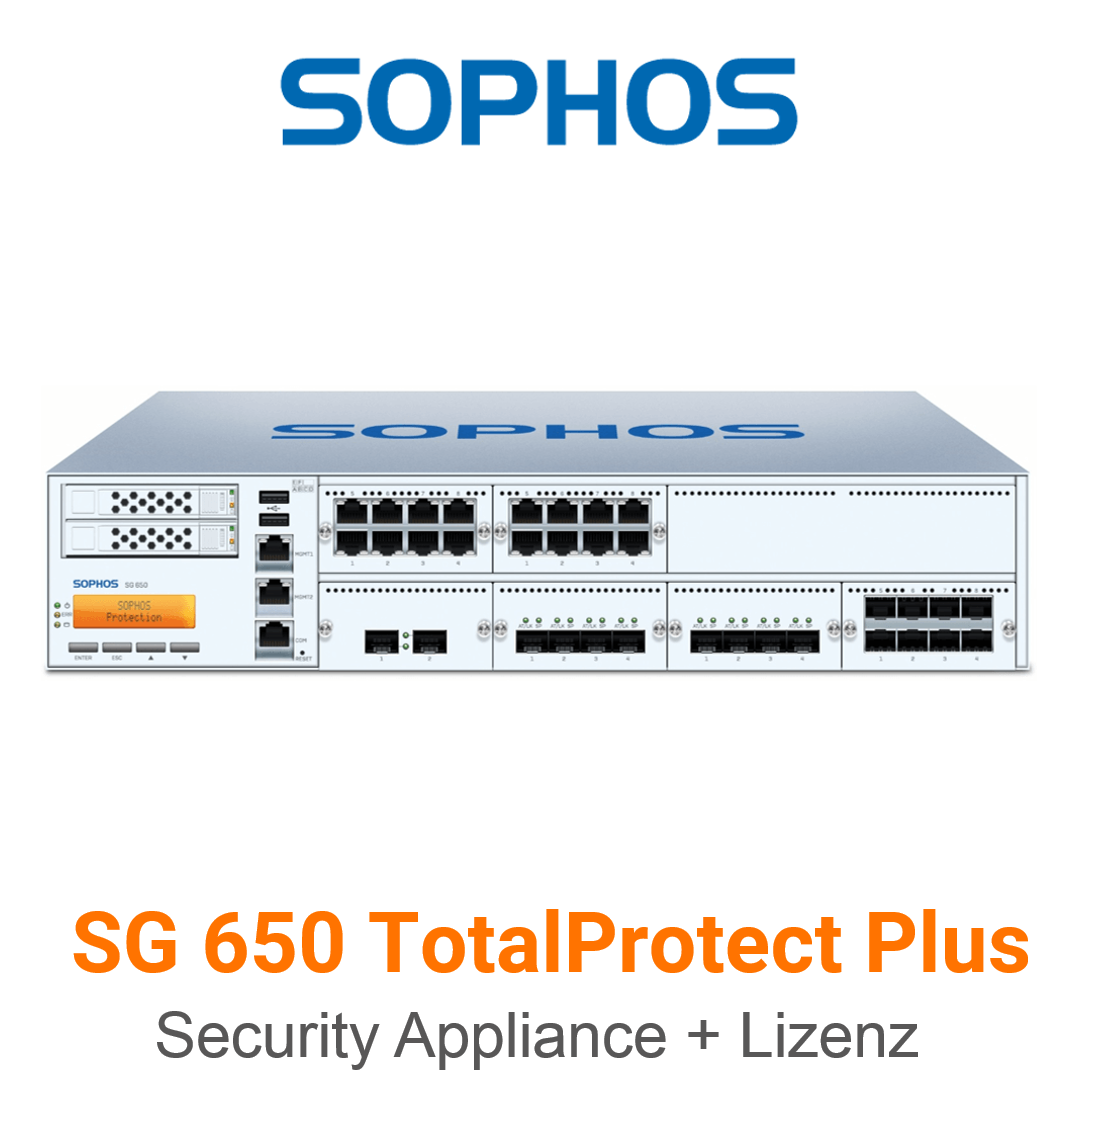 Sophos SG 650 TotalProtect Plus Bundle (Hardware + Lizenz) (End of Sale/Life)